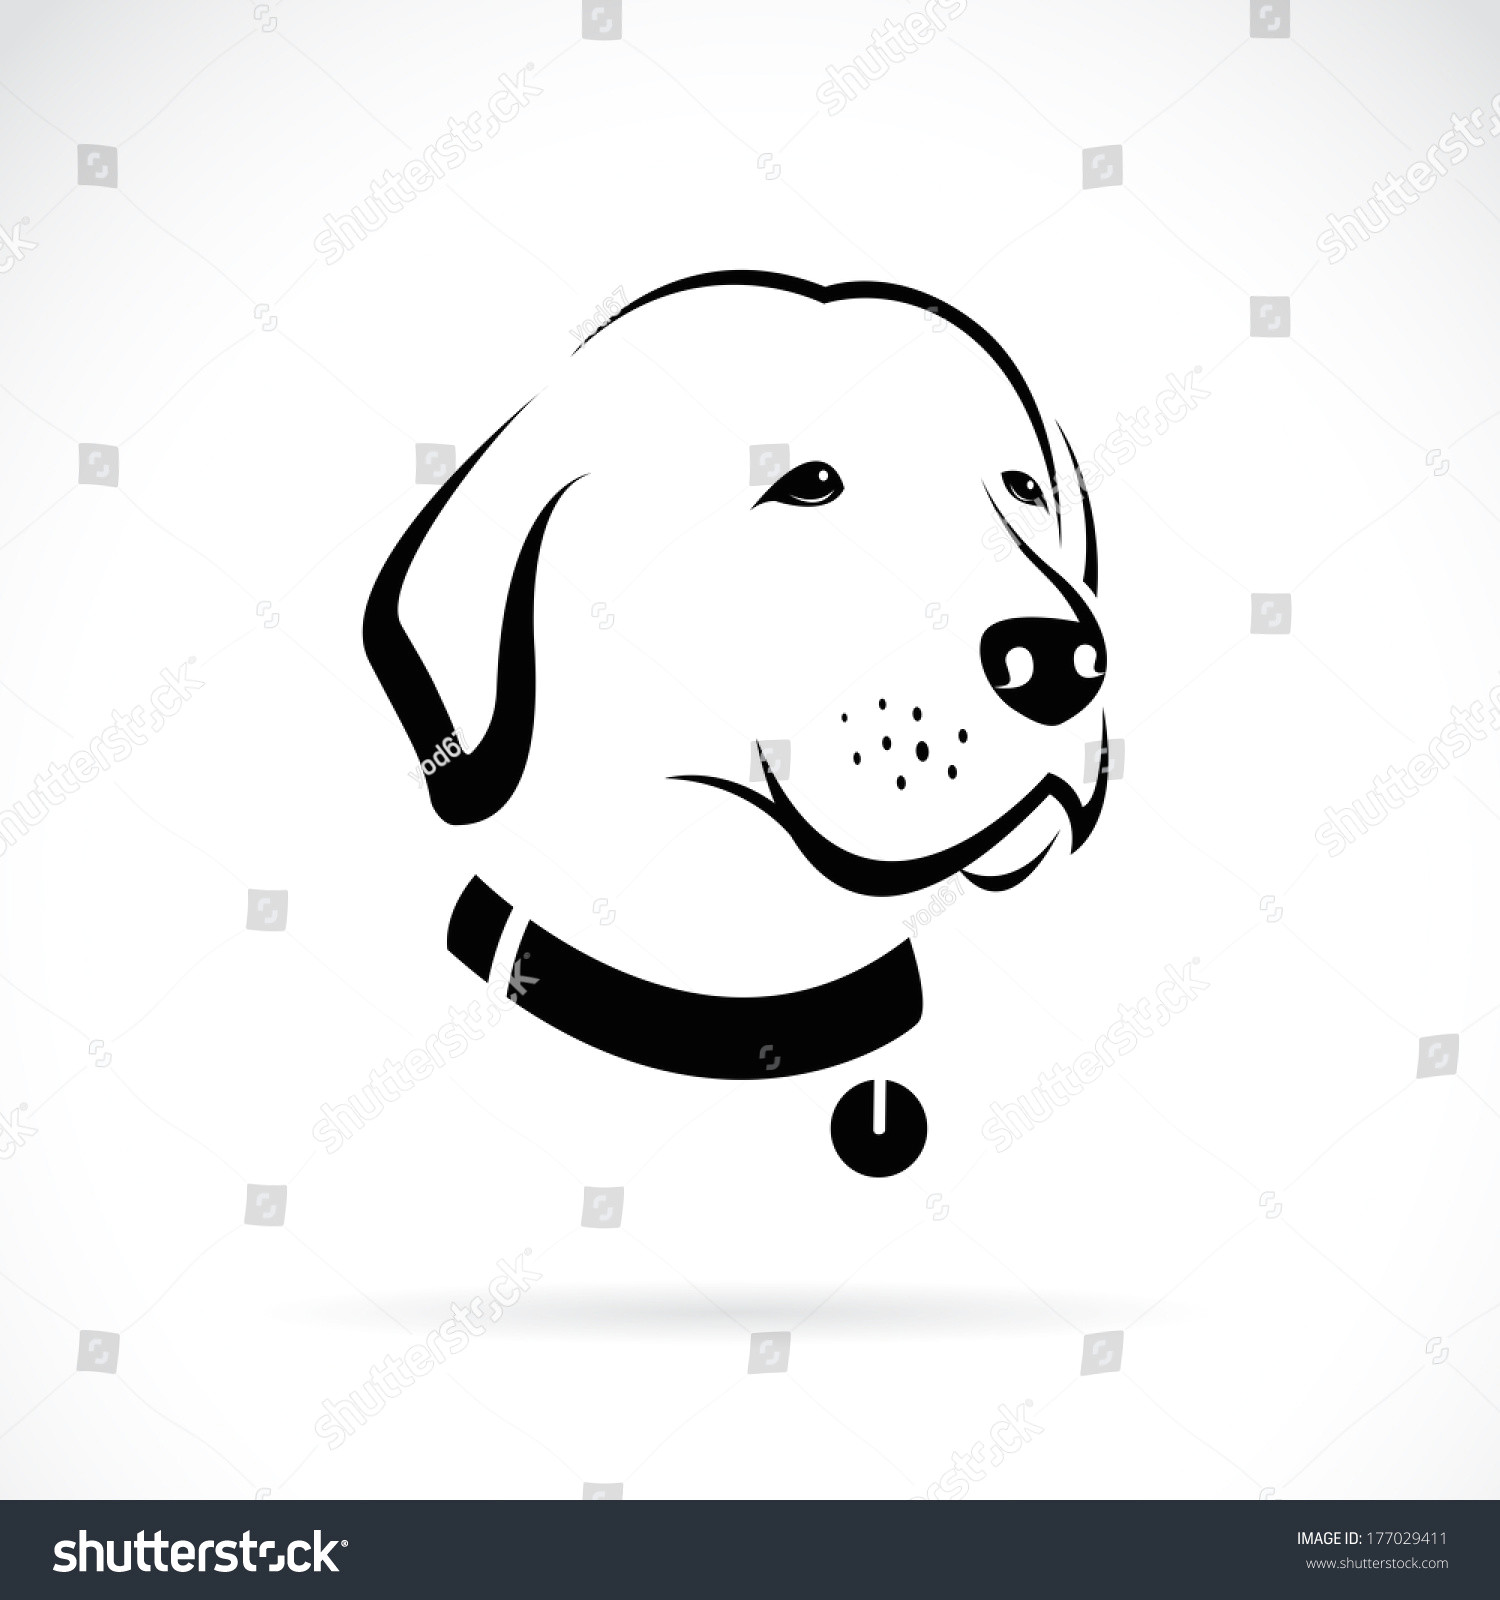 Drawing Dog Skull Vector Image Labrador Dogs Head On Stock Vector Royalty Free